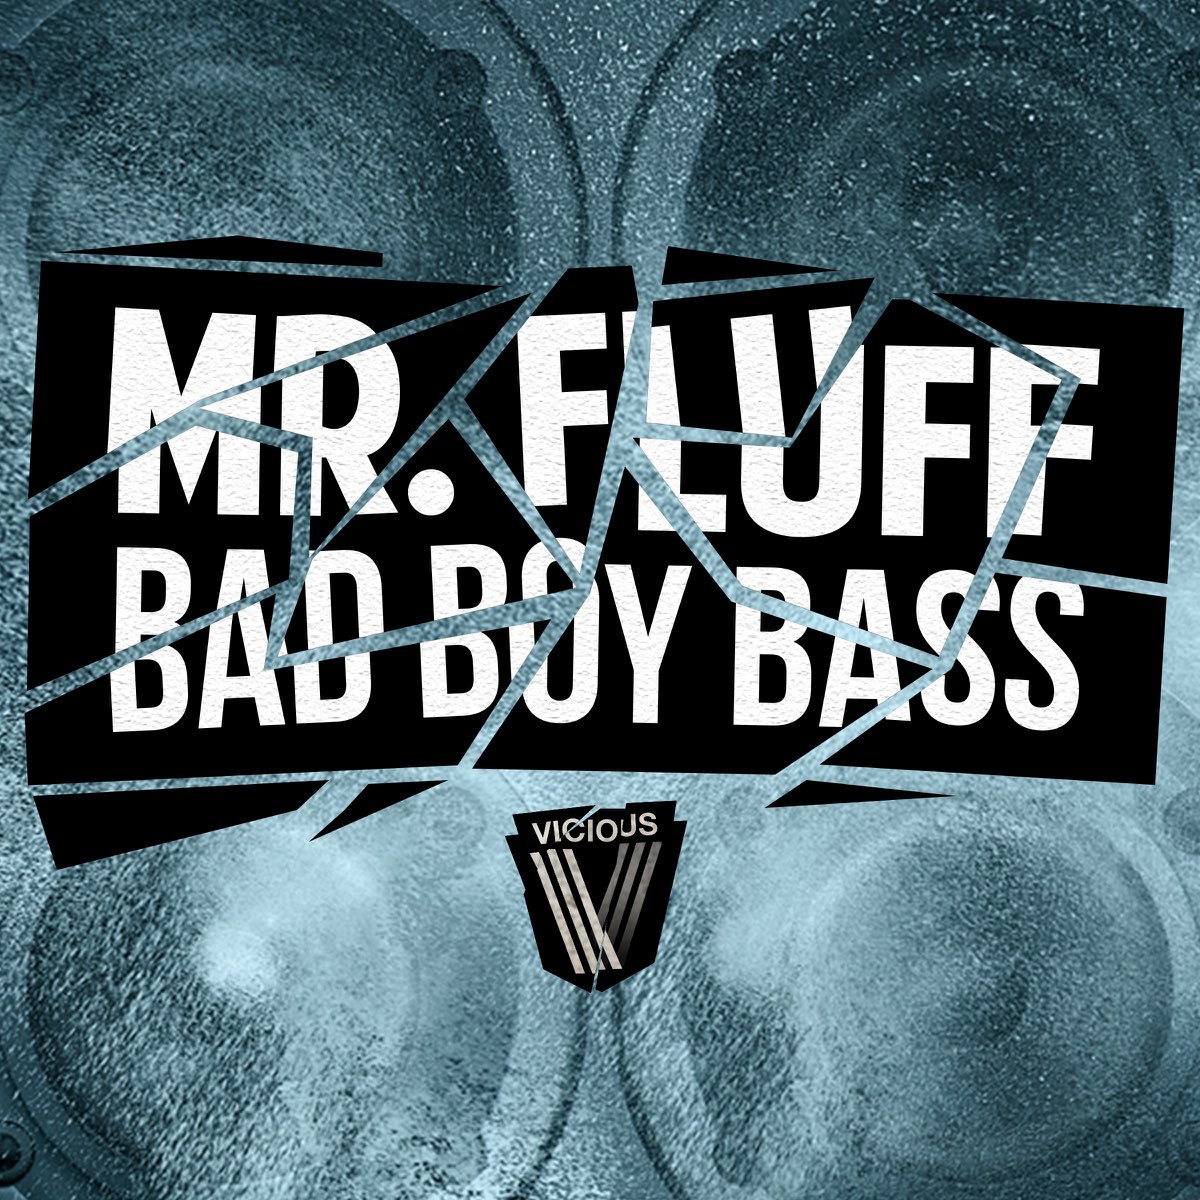 Флафф песни. Bad boy Bass. Mr fluff. Original Bass. Vicious recordings.